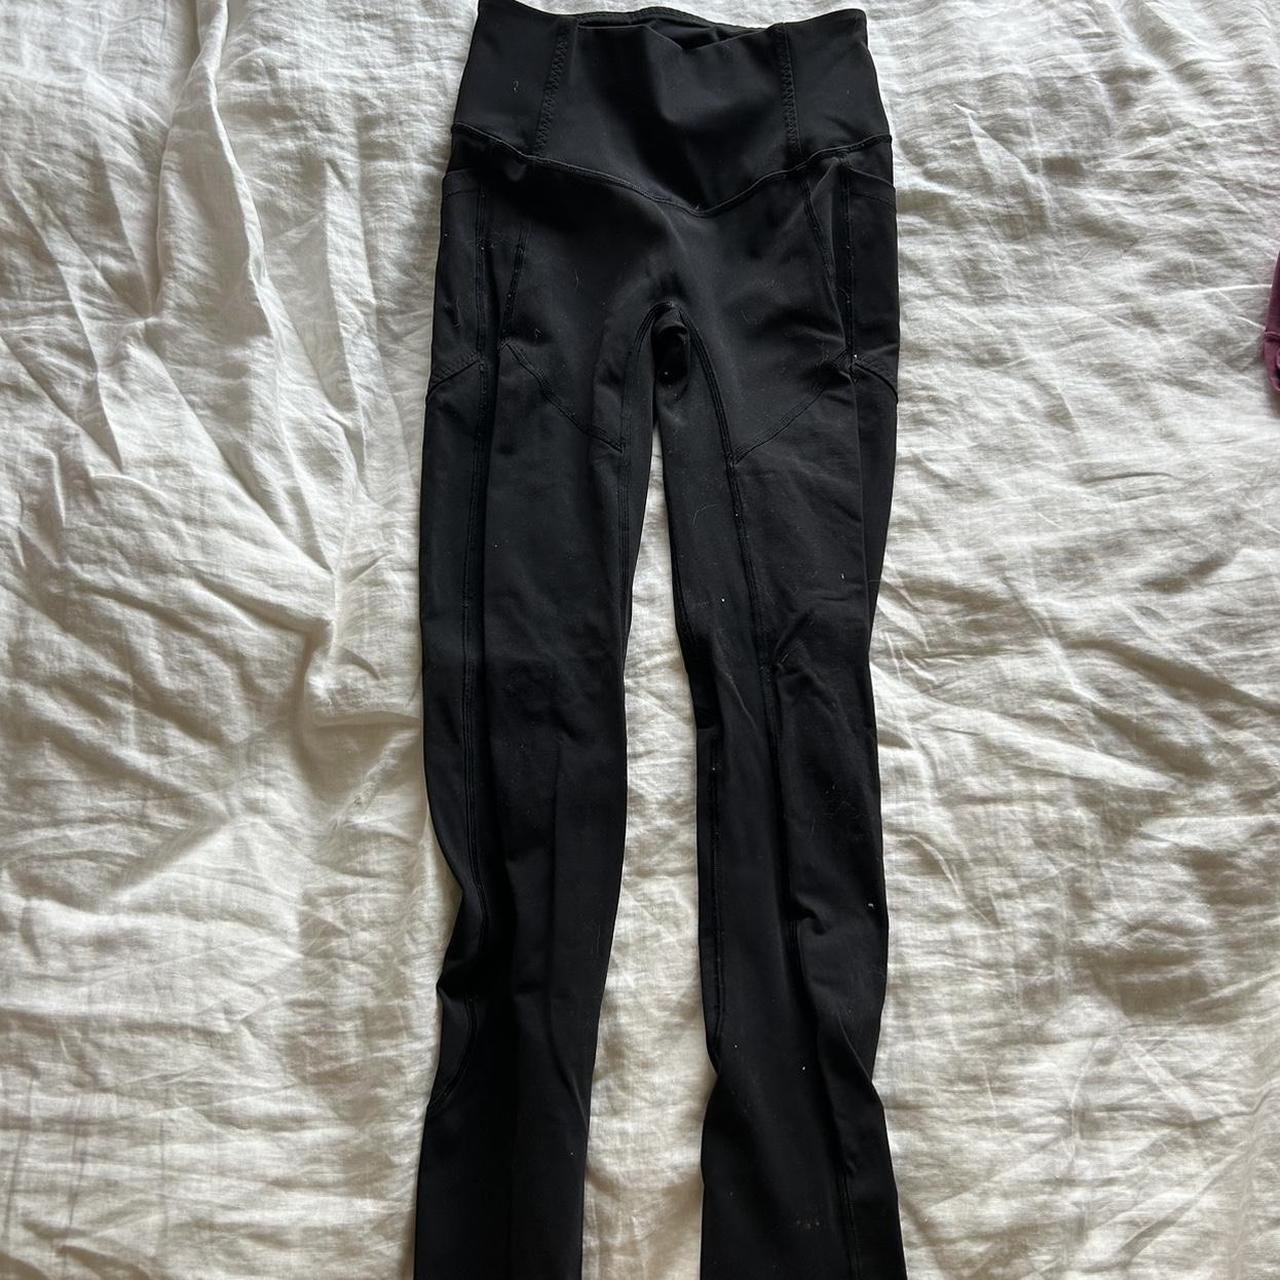 Black lululemon leggings with side pockets (both